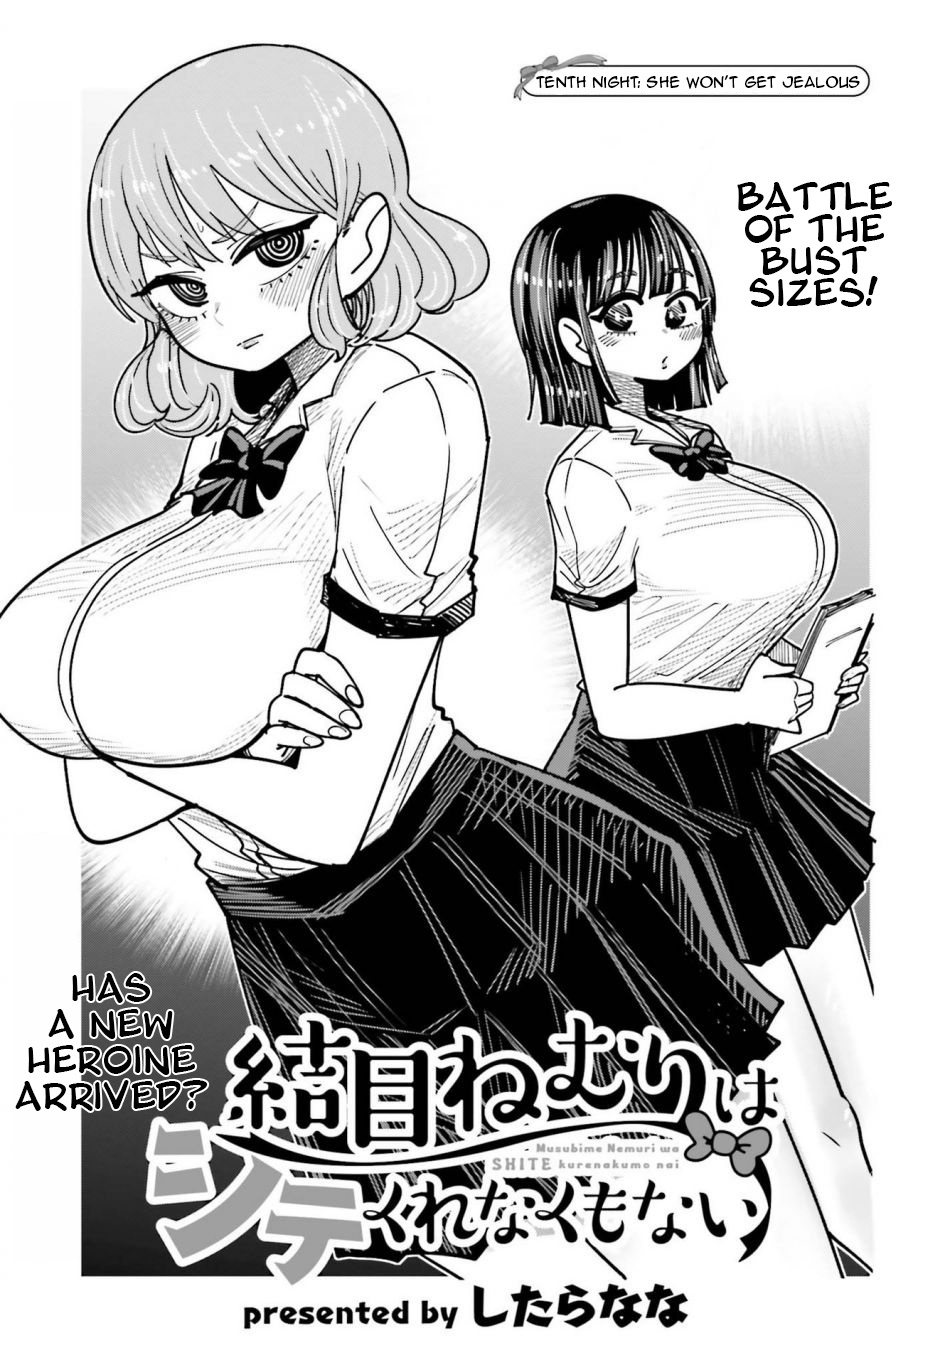 Musubime Nemuri Wa Shite Kurenaku Mo Nai Vol.2 Chapter 10: Tenth Night: She Won't Get Jealous - Picture 1